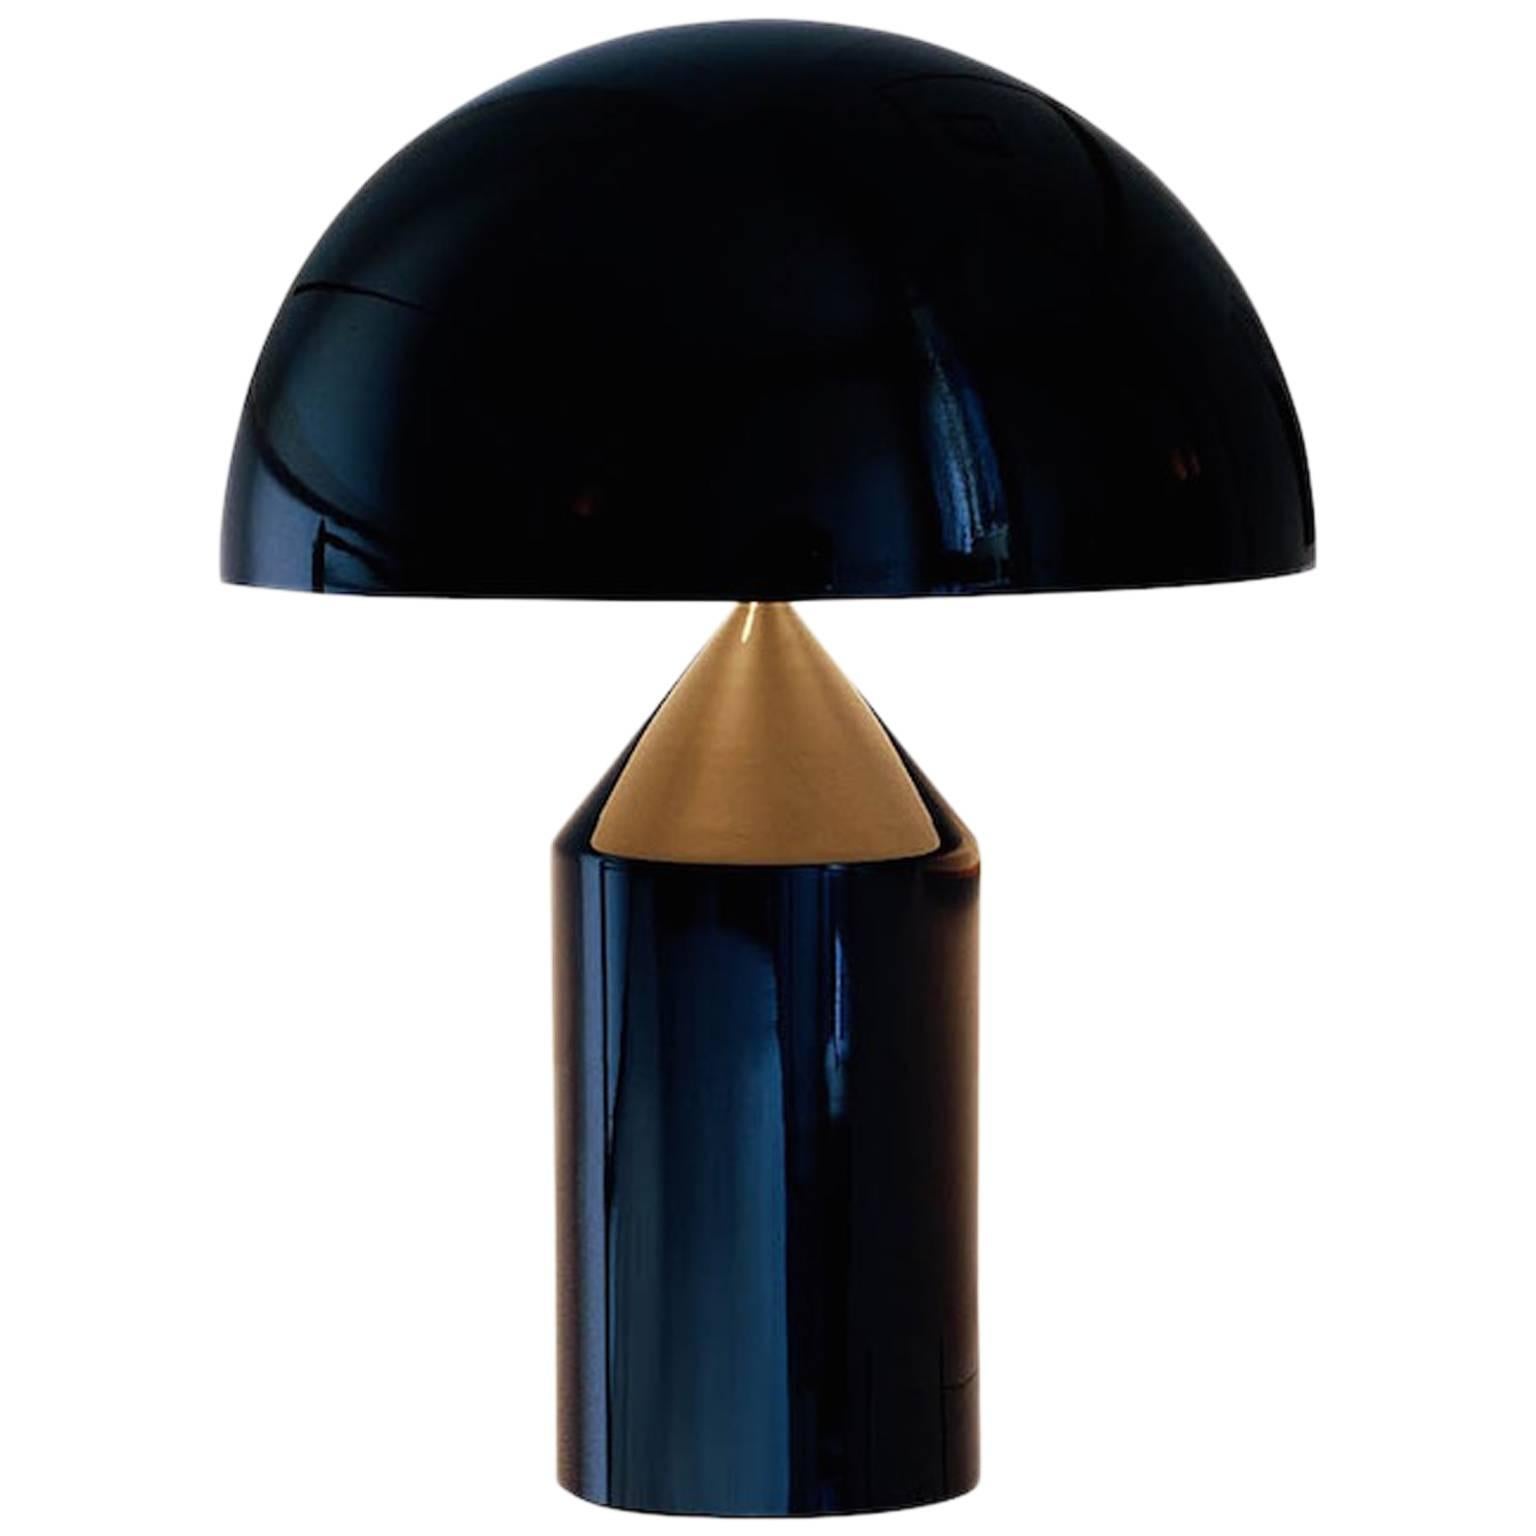 Atollo Model 239 Table Lamp by Vico Magistretti for Oluce